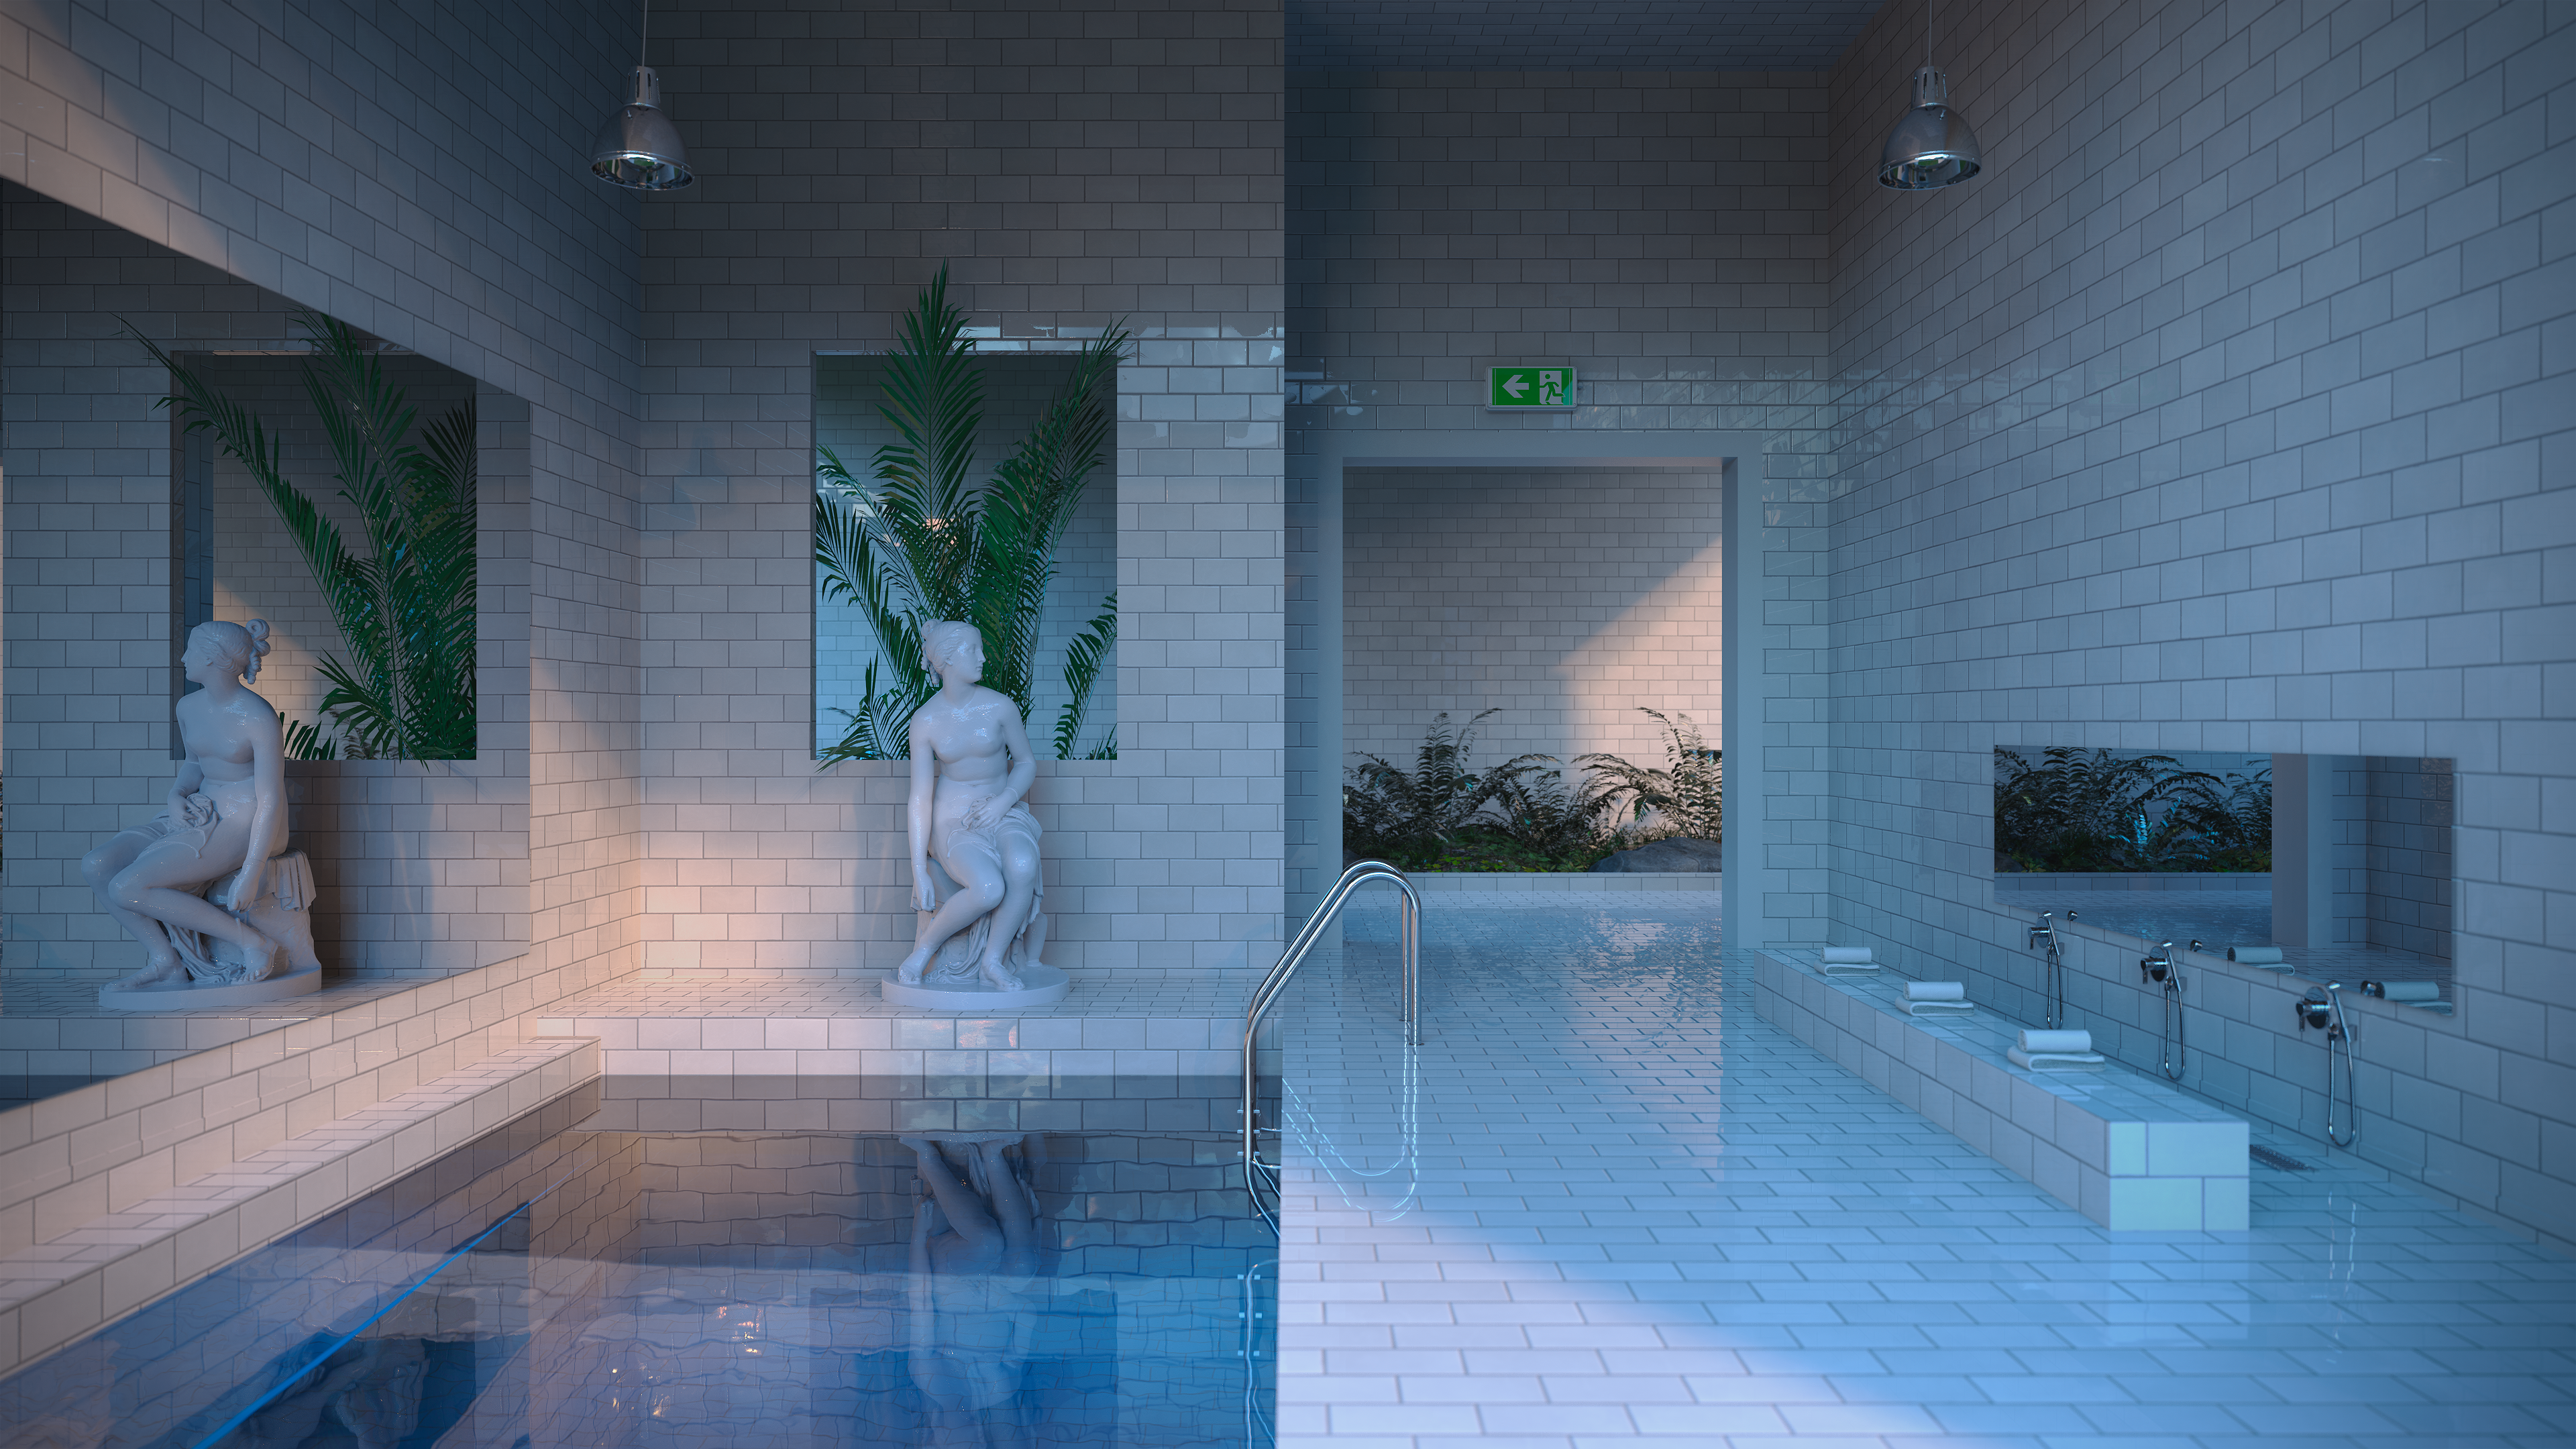 General 3840x2160 CGI digital art Blender architecture interior interior design bath swimming pool statue tiles